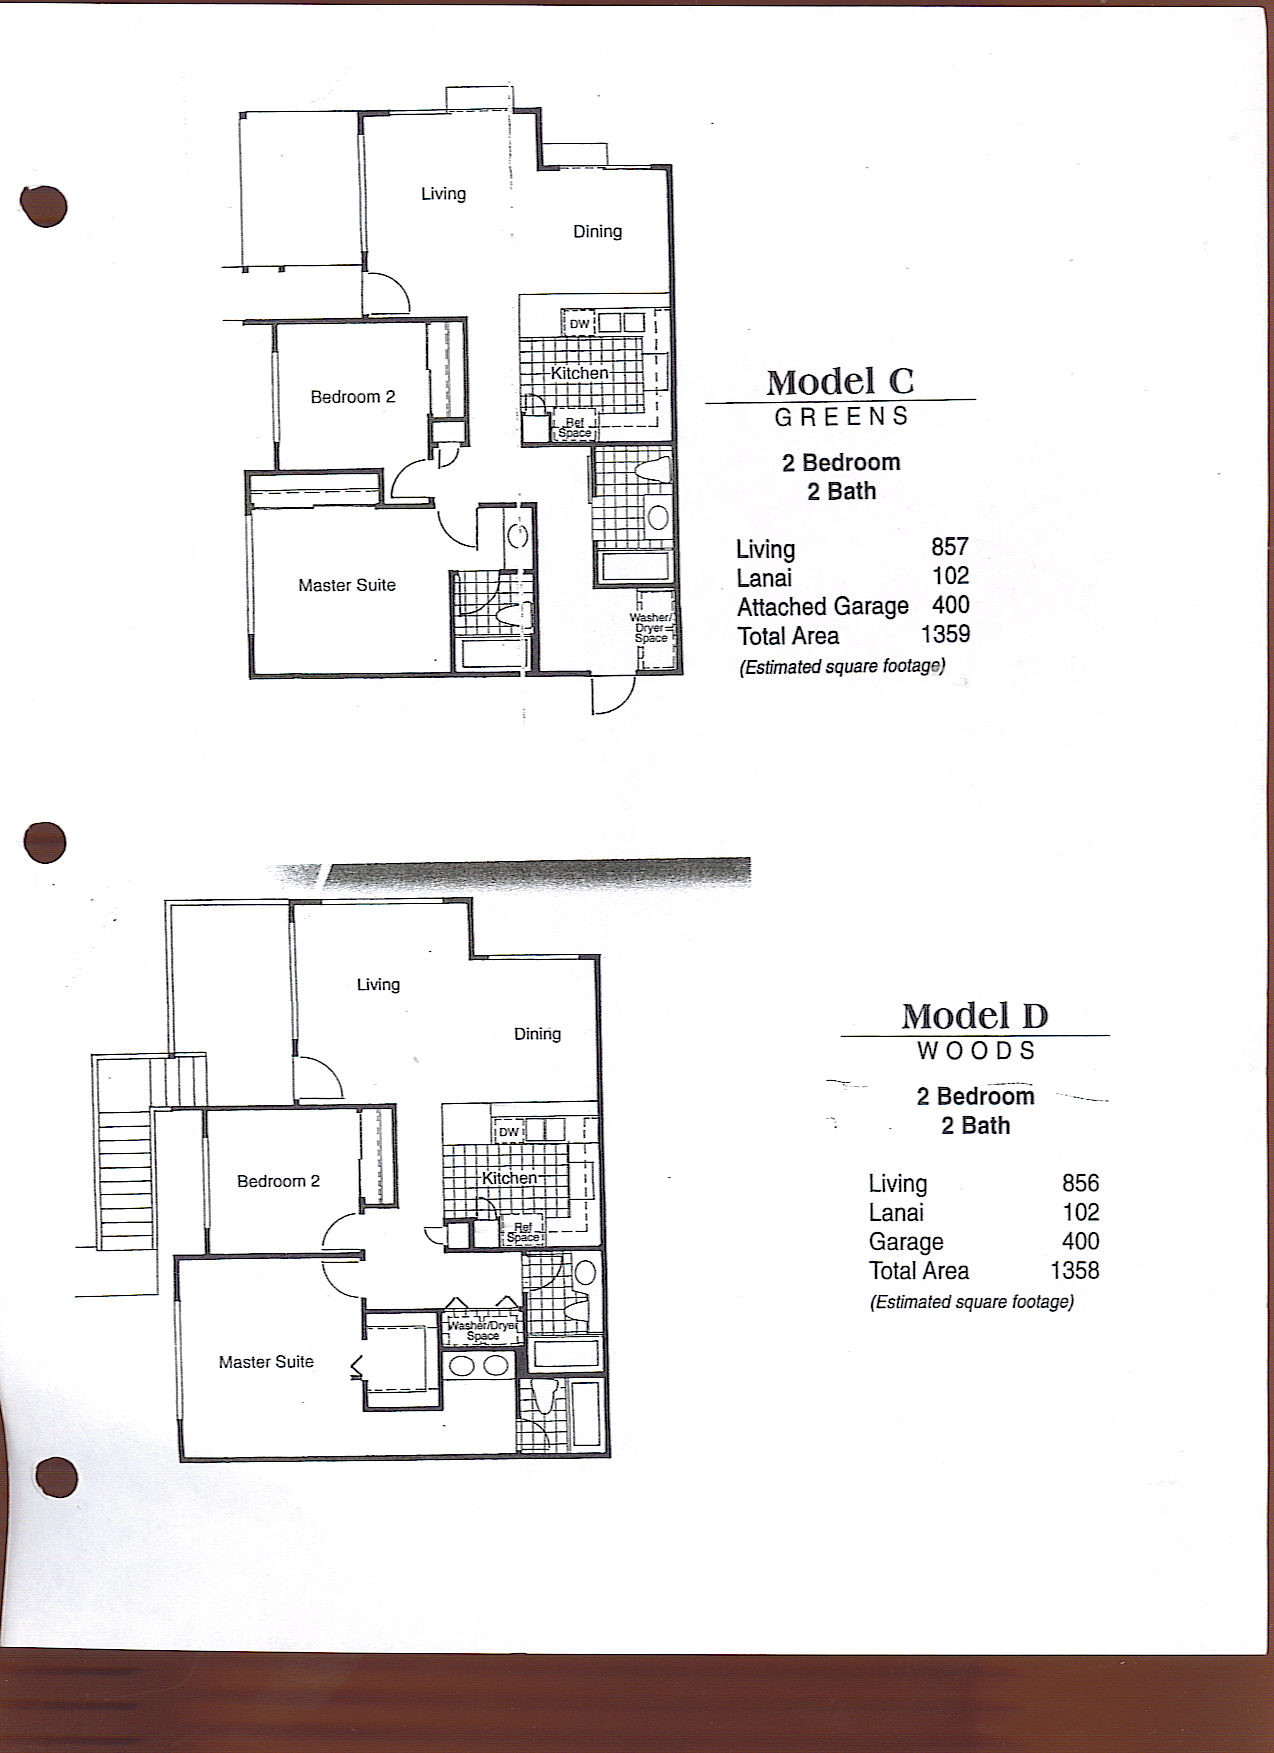 Model C - Greens 2 bedroom / 2 bathroom Living - 857 sq. ft. Lanai - 102 sq. ft. Attached Garage - 400 sq. ft. Total Area - 1,359 sq. ft. Model D - Woods 2 bedroom / 2 bathroom Living - 856 sq. ft. Lanai - 102 sq. ft. Garage - 400 sq. ft. Total Area - 1358 sq. ft.